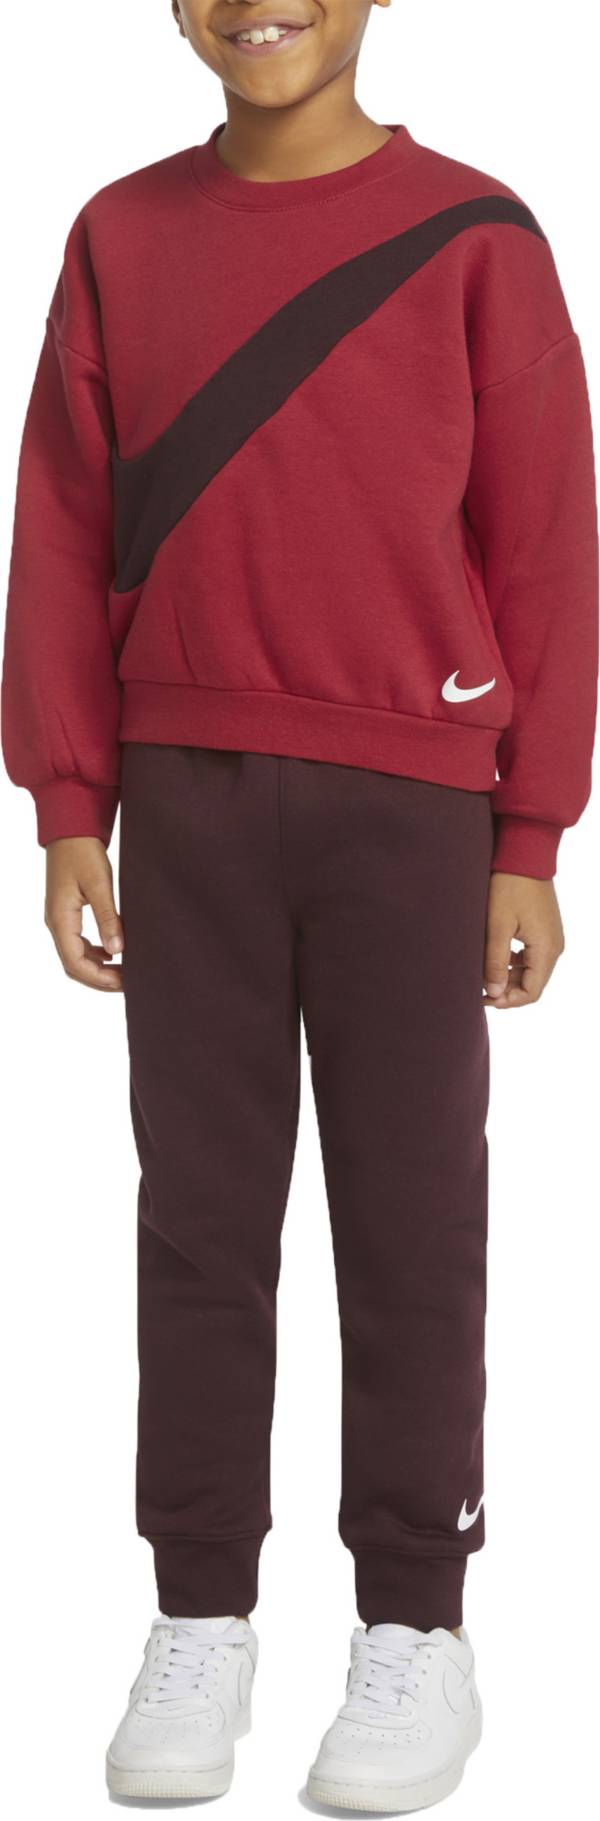 Nike Little Boys' Swoosh Essentials Fleece Crewneck and Joggers Set product image